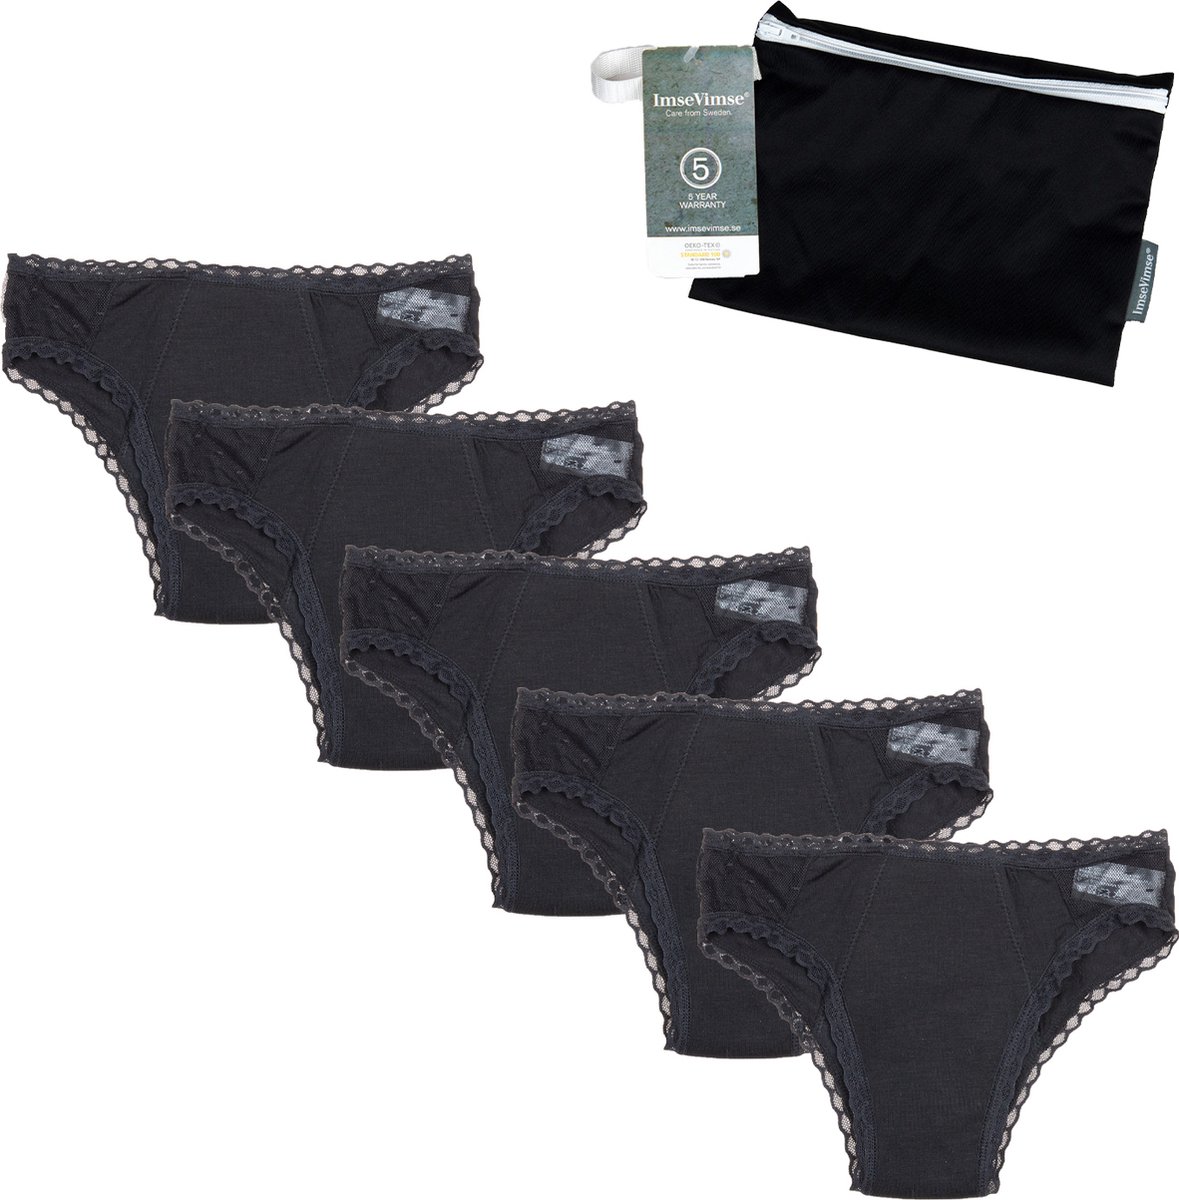 Cheeky Pants Feeling Fancy - 5-delige menstruatieondergoed set - Maat 40-42 - Low-rise - Zero waste product - Waterdichte wetbag